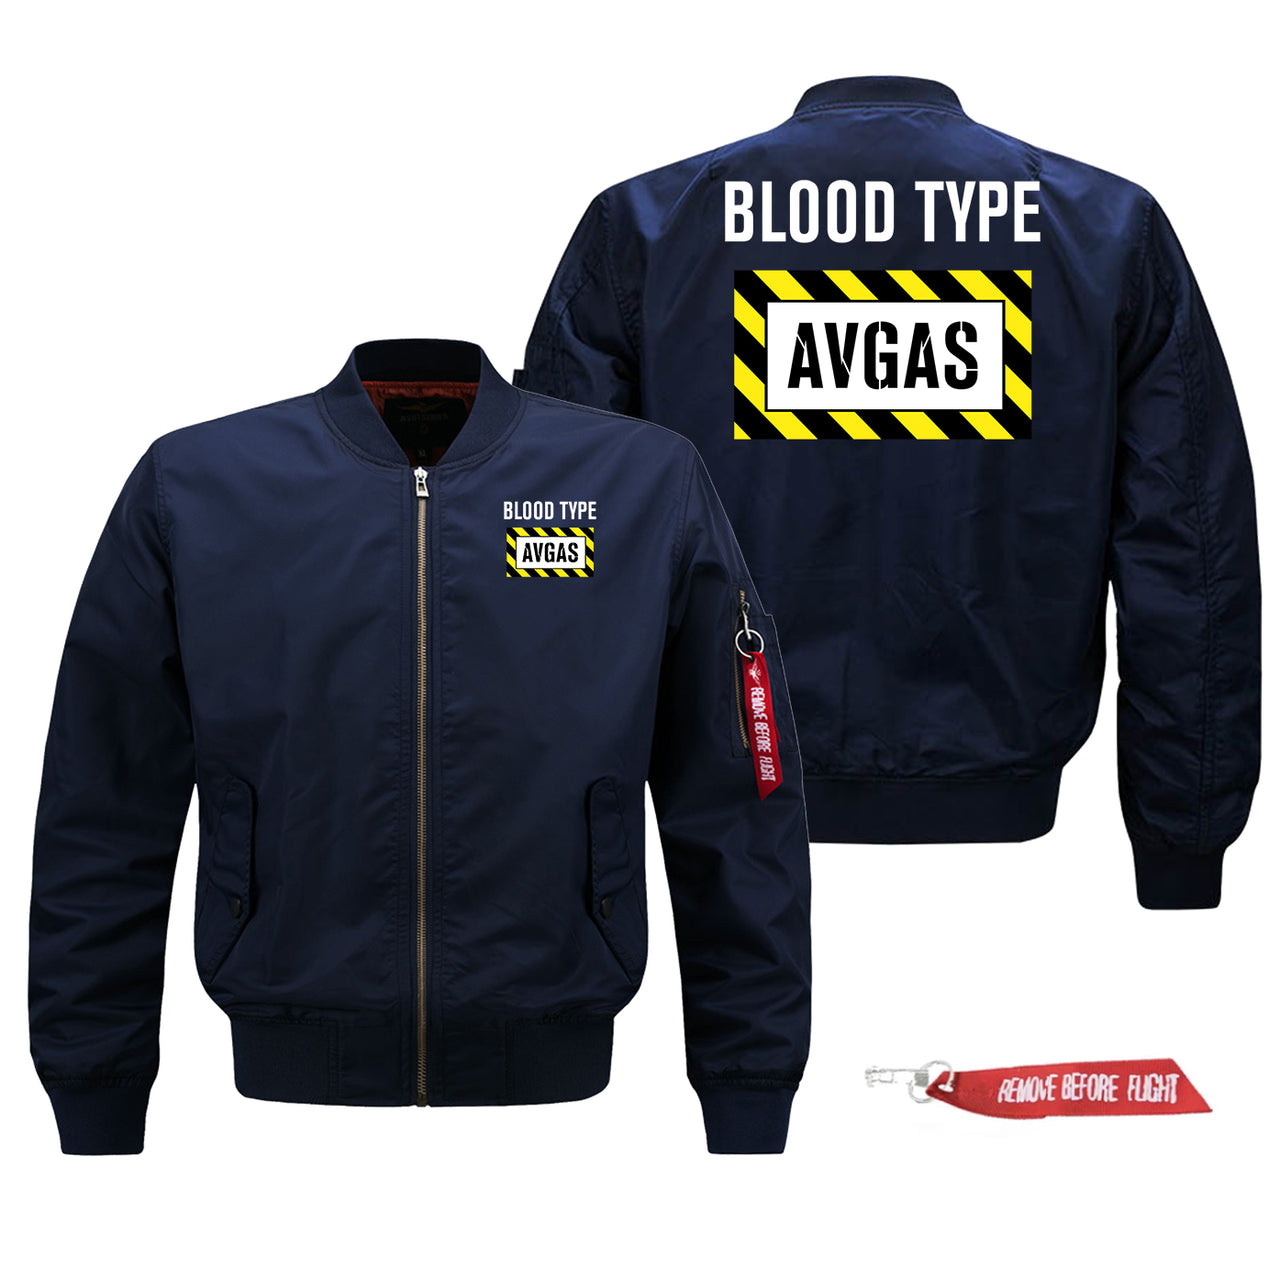 Blood Type AVGAS Designed Pilot Jackets (Customizable)